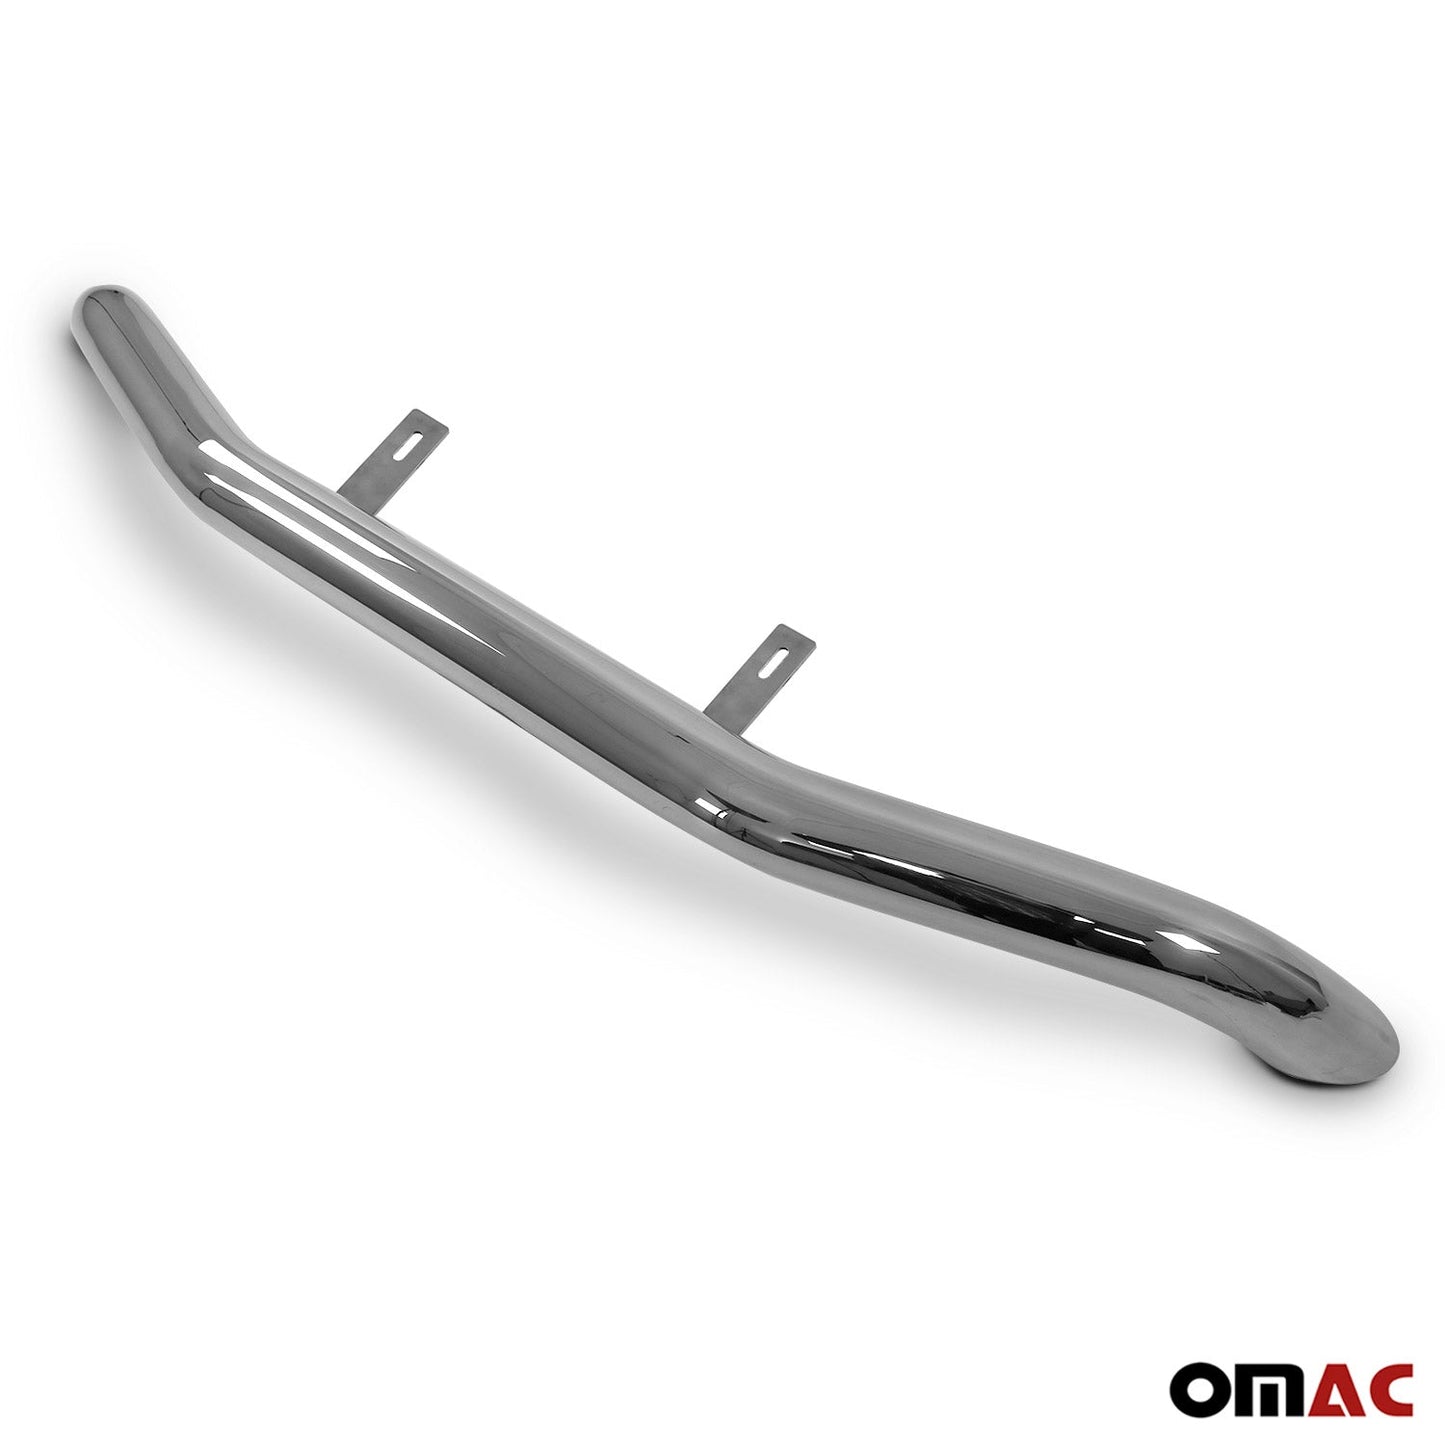 OMAC Local Pickup Bull Bar Push Bumper for Mercedes Sprinter W906 2014-2018 U025411